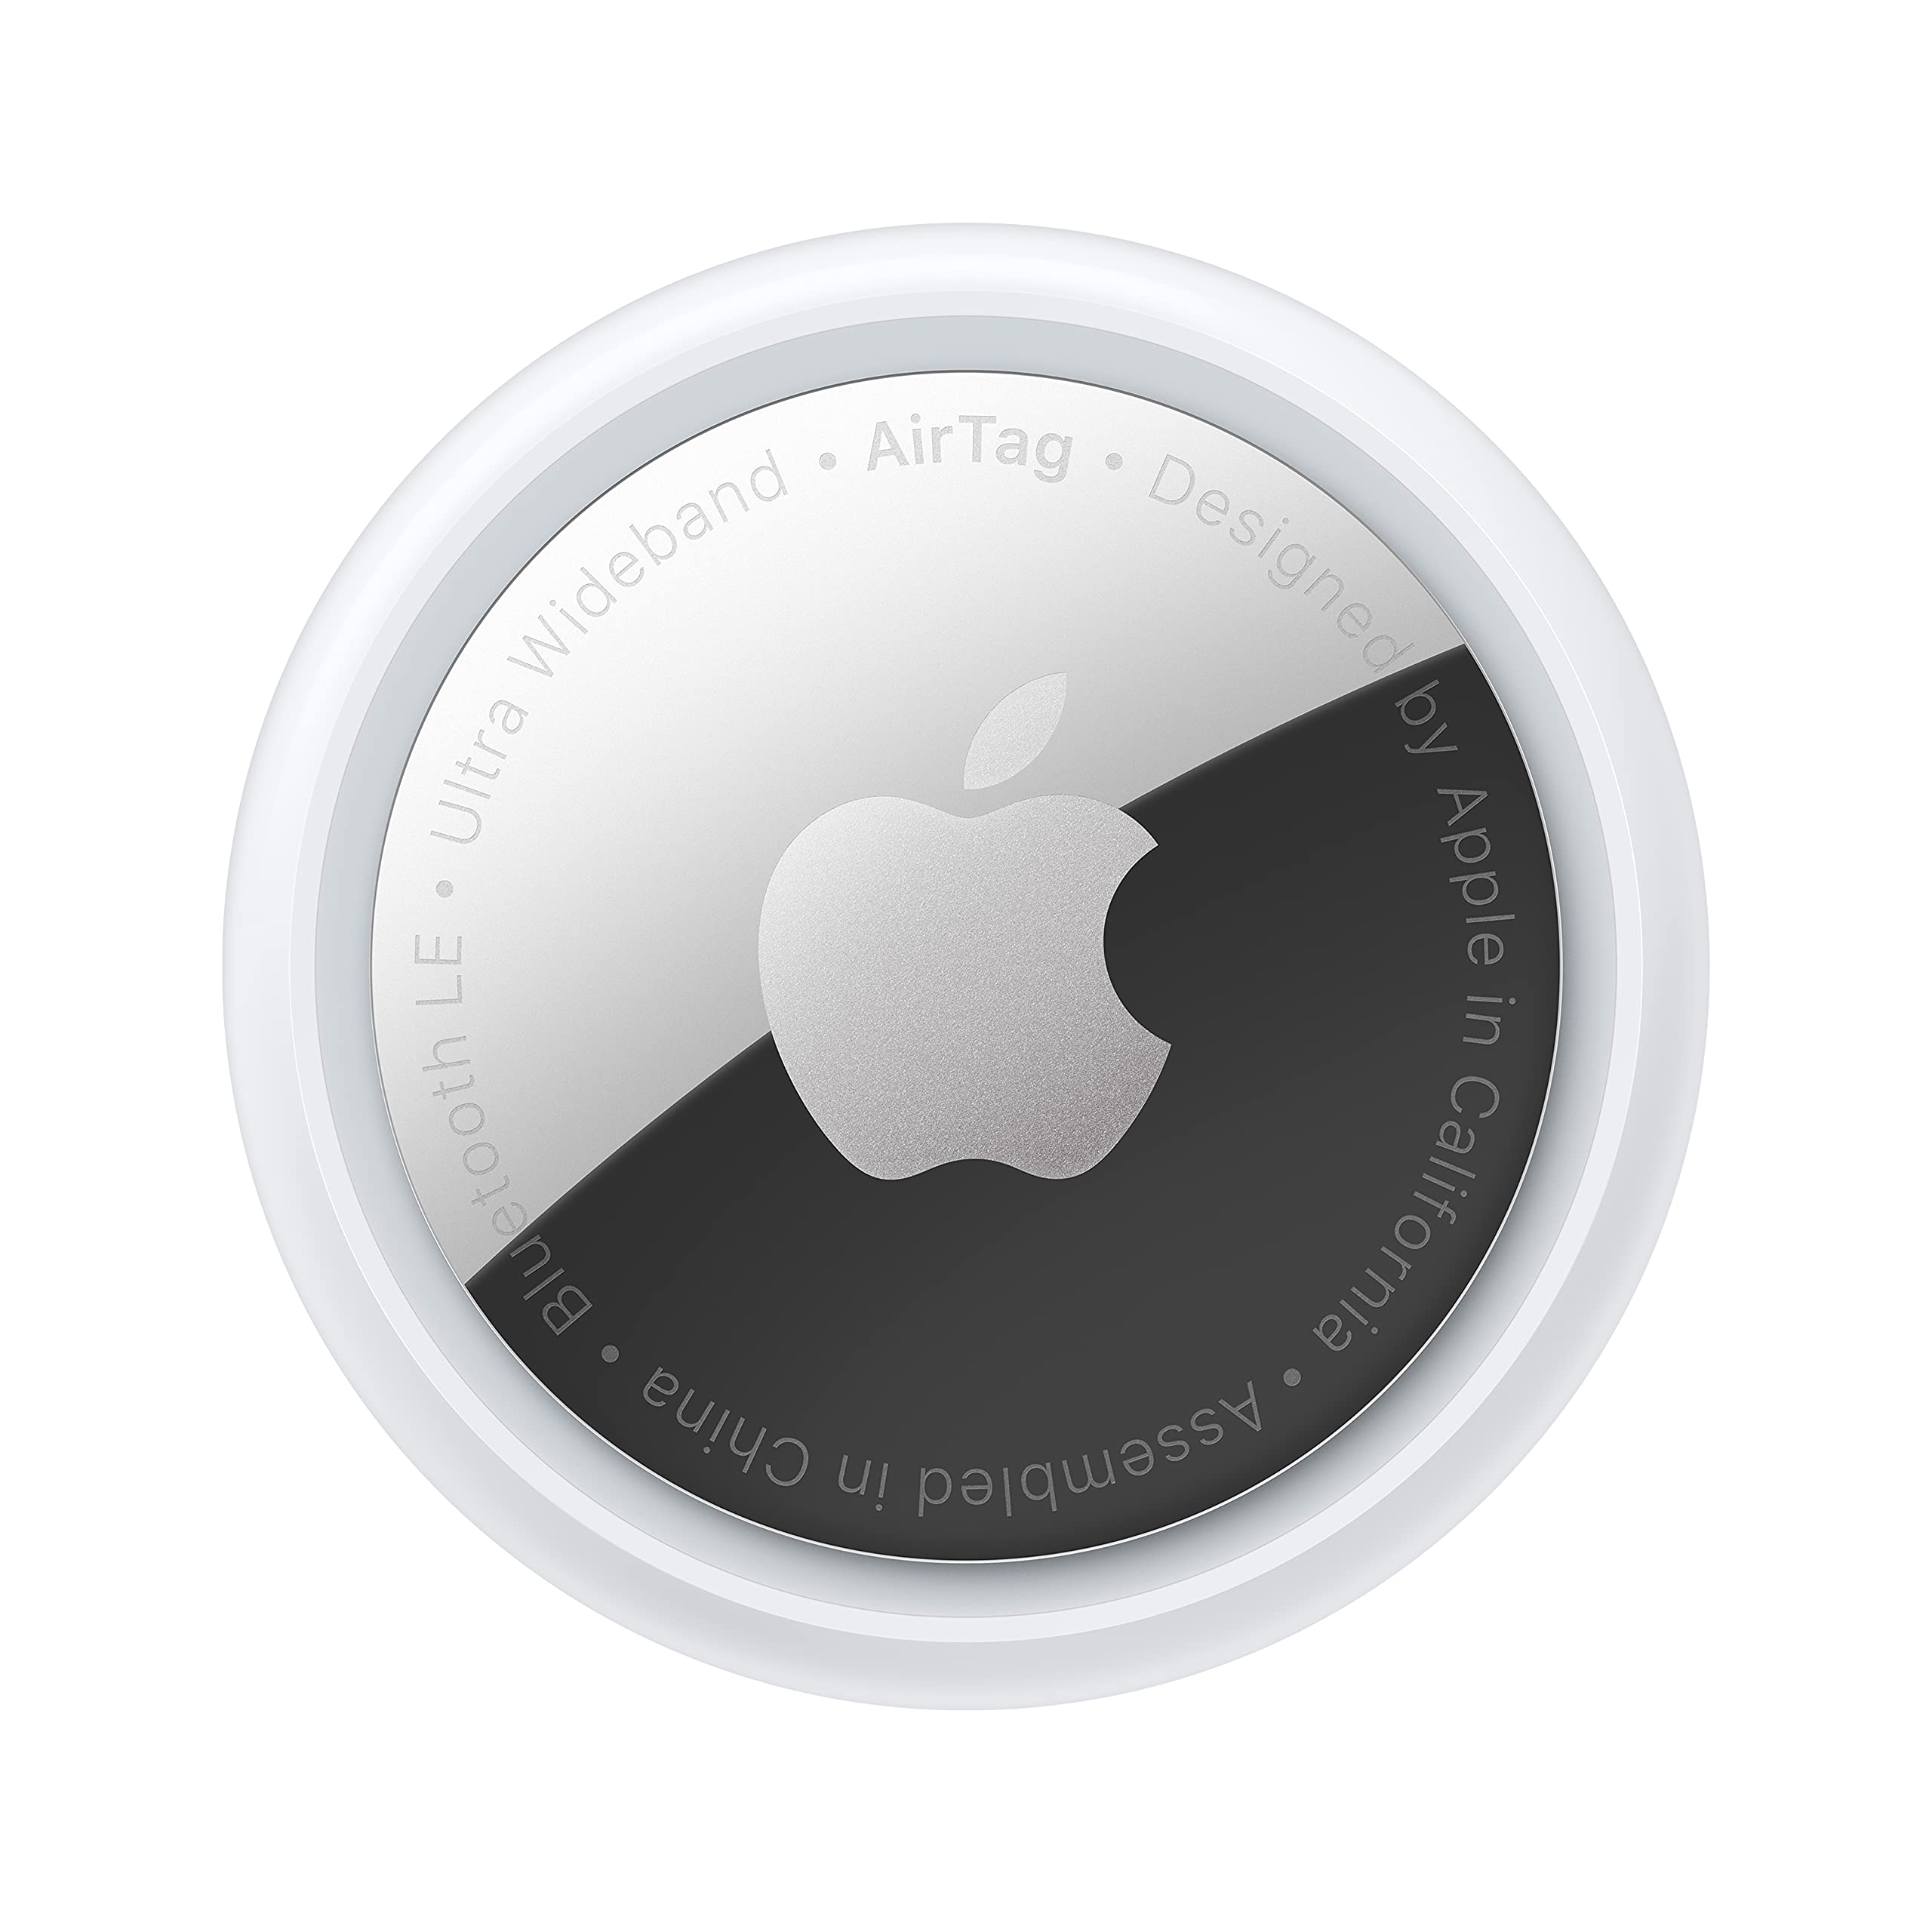 Apple AirTag - $25.00 - Amazon